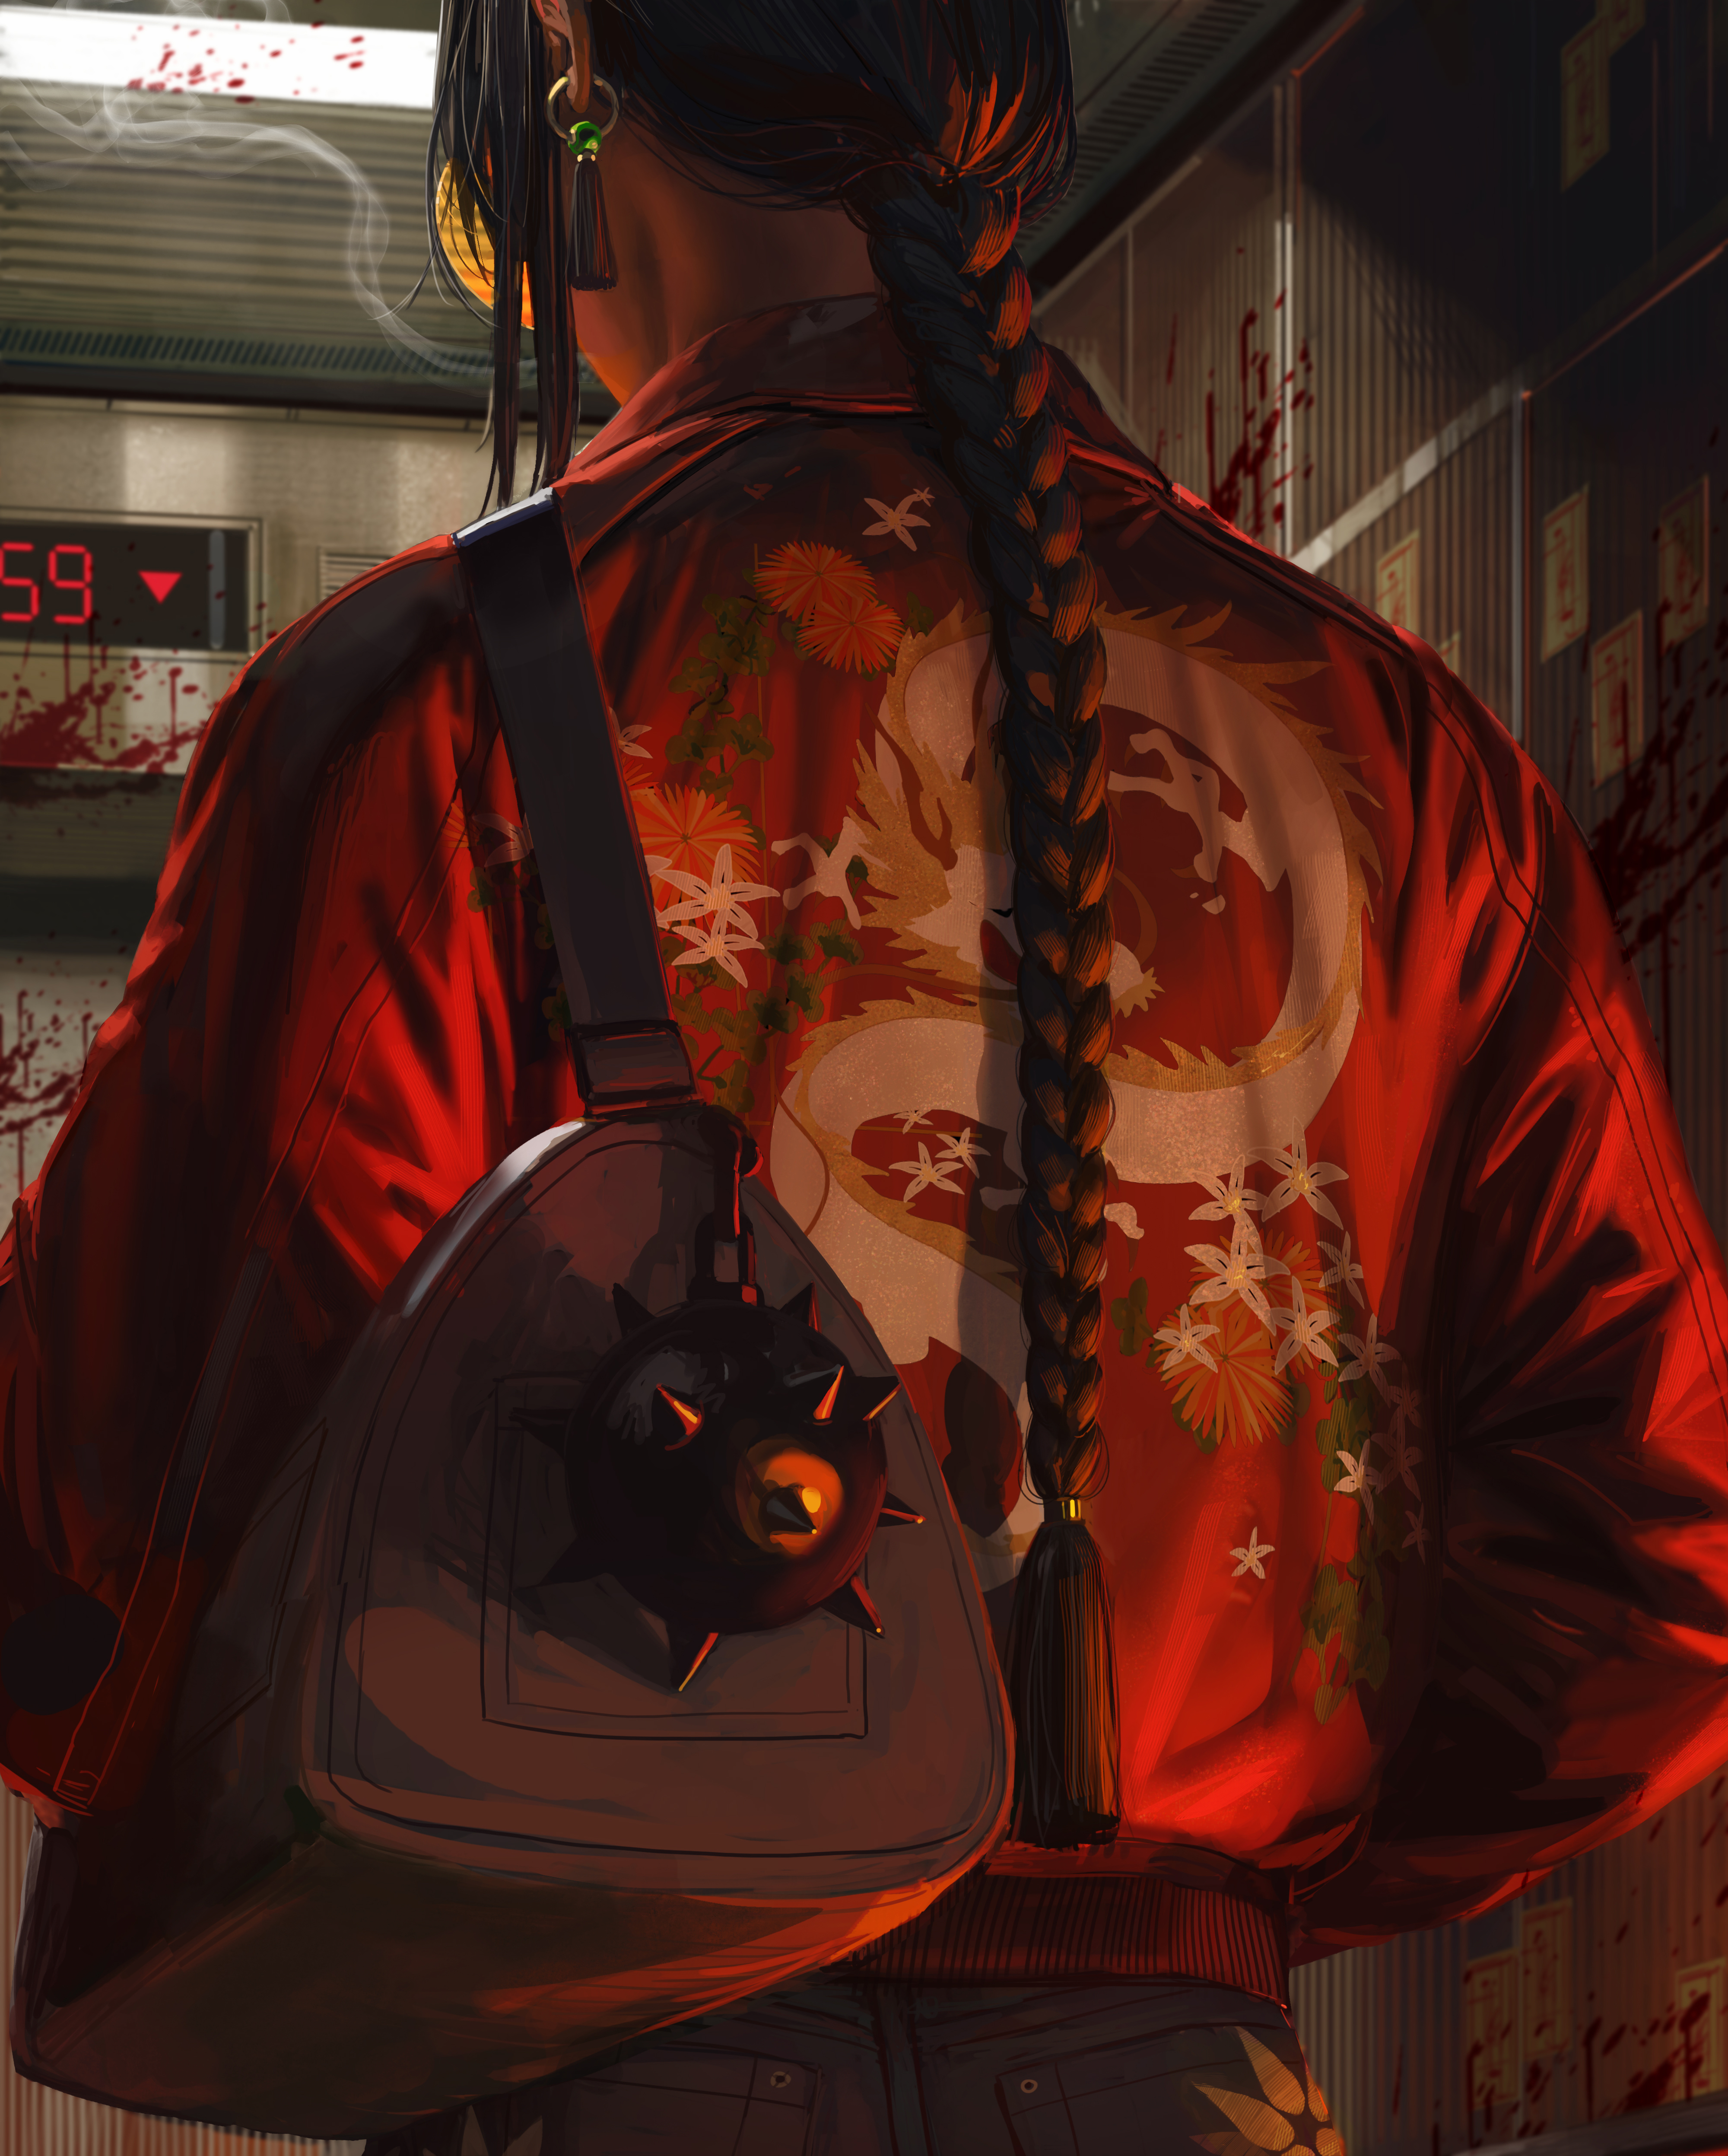 General 4000x4990 digital art artwork illustration women long hair dark hair detailed GUWEIZ portrait display smoke Chinese dragon bag red jackets braids